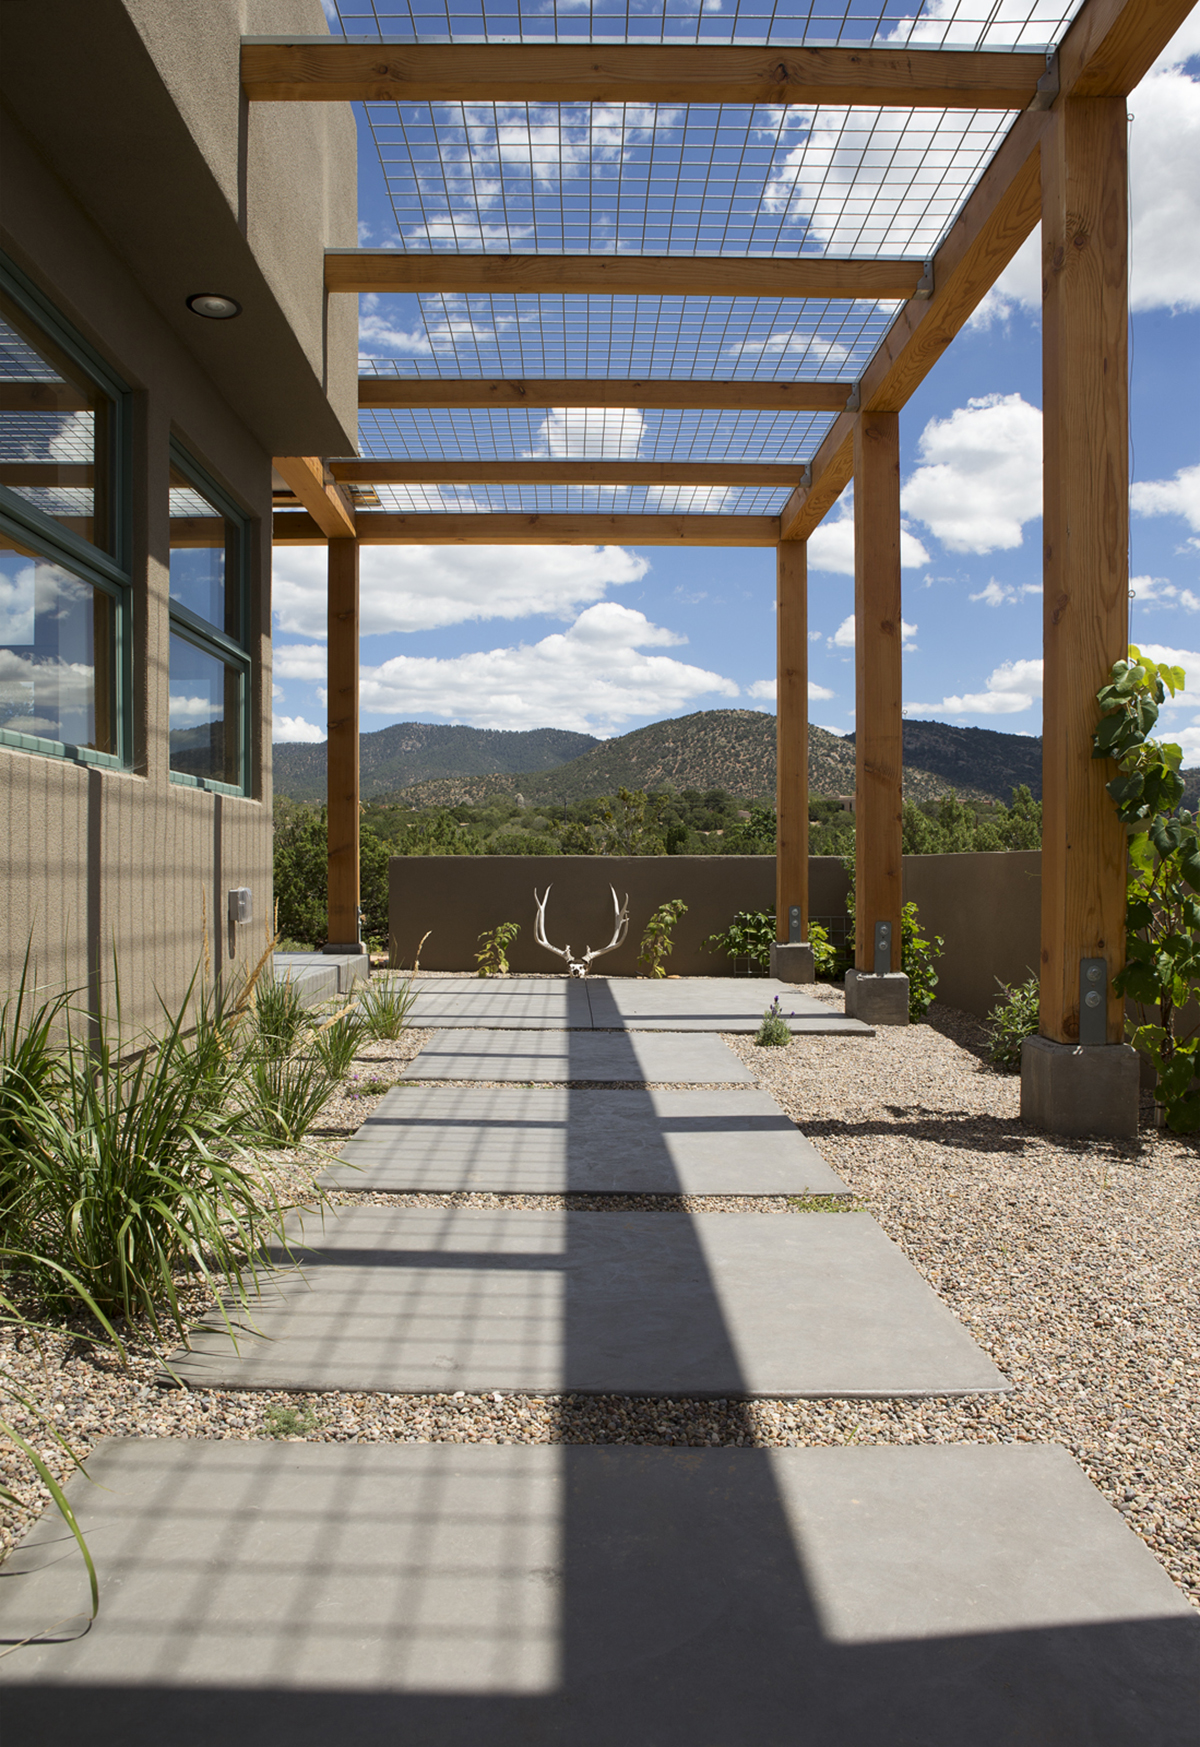 A concrete patio with a wooden pergola designed by a Santa Fe architect.